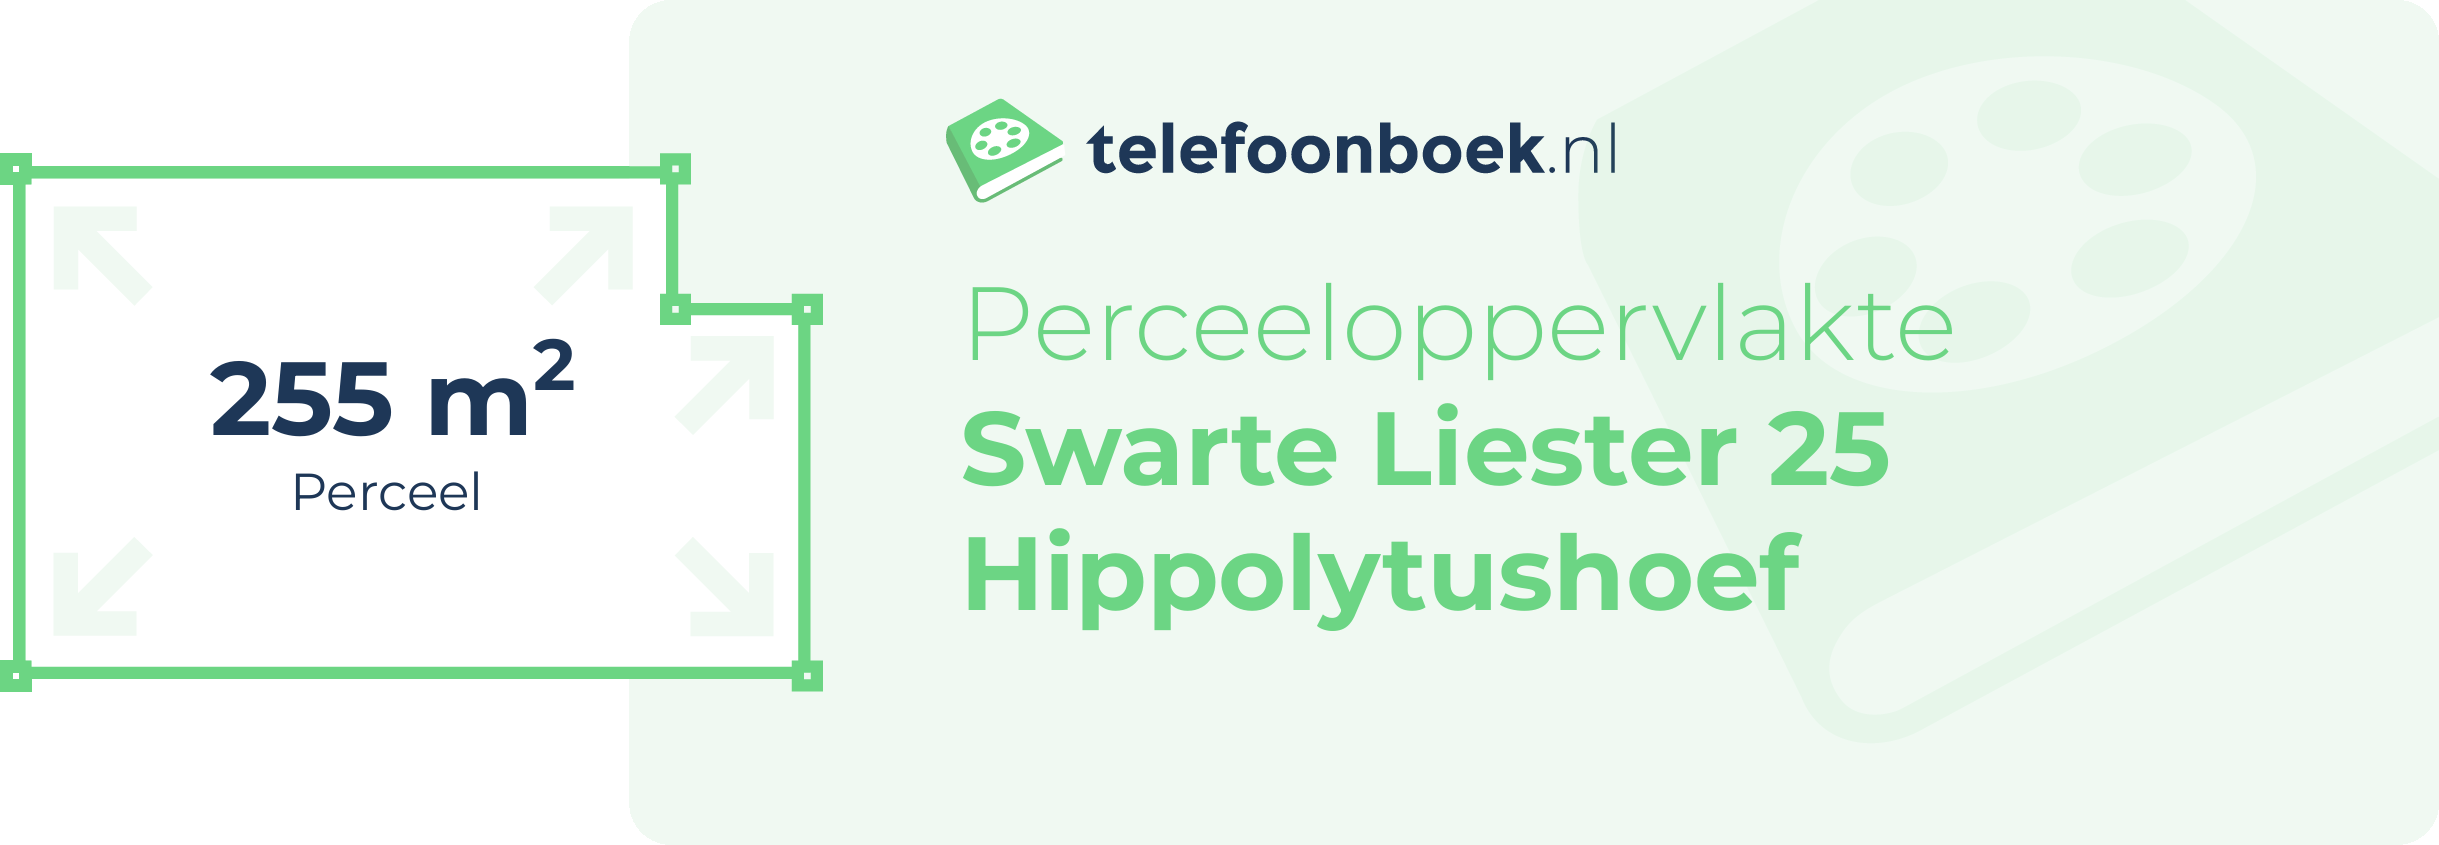 Perceeloppervlakte Swarte Liester 25 Hippolytushoef